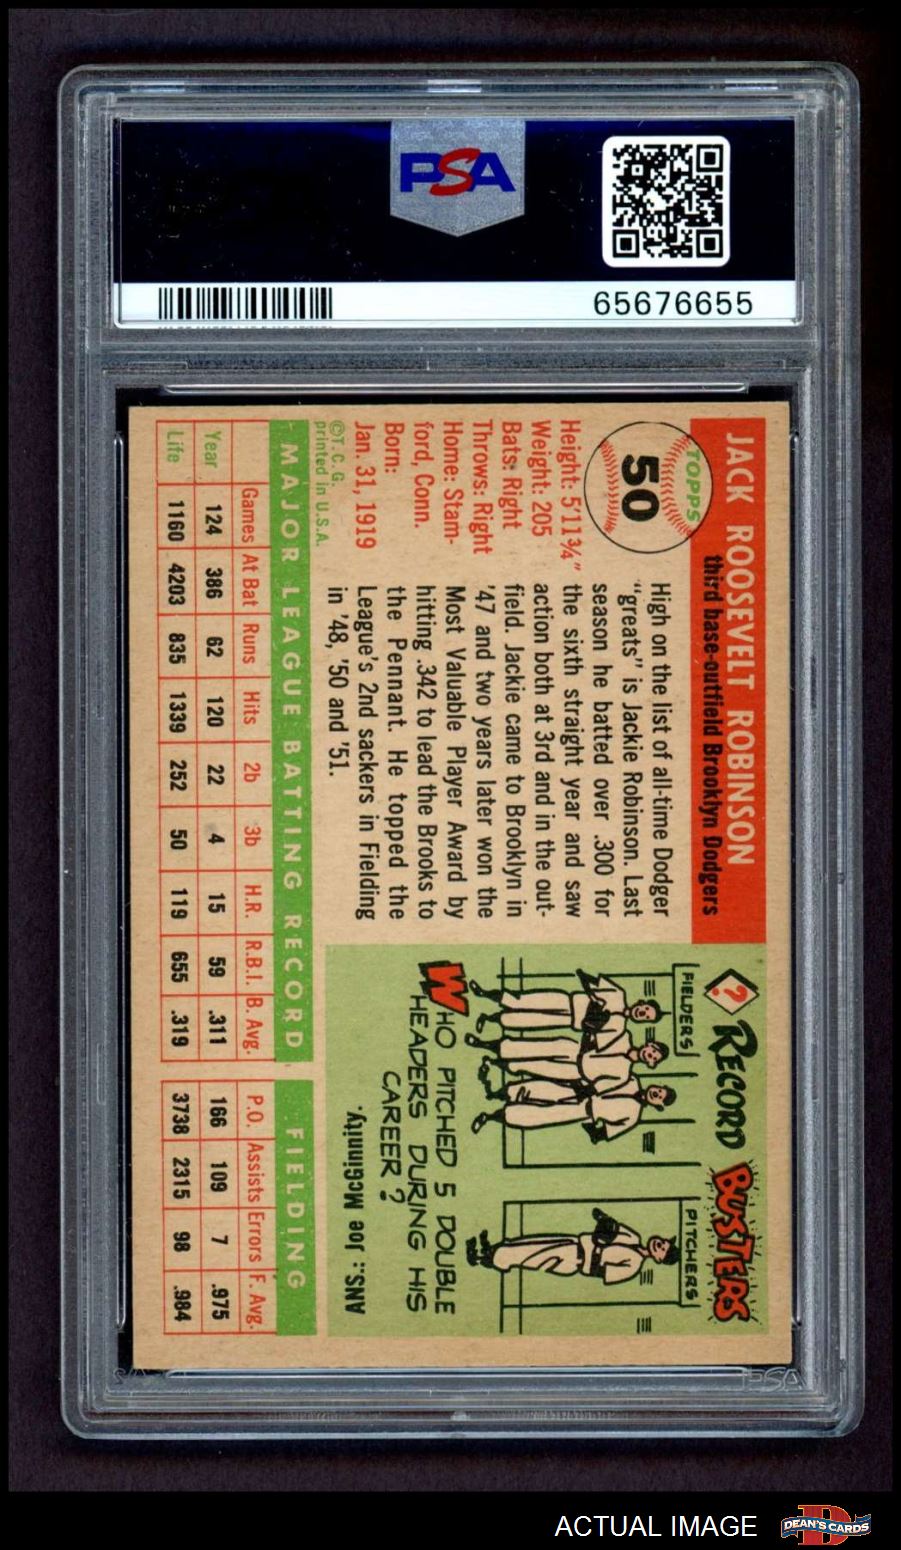 Sold at Auction: A 1955 Topps Jackie Robinson Baseball Card No. 50 (SGC 3.5  VG)